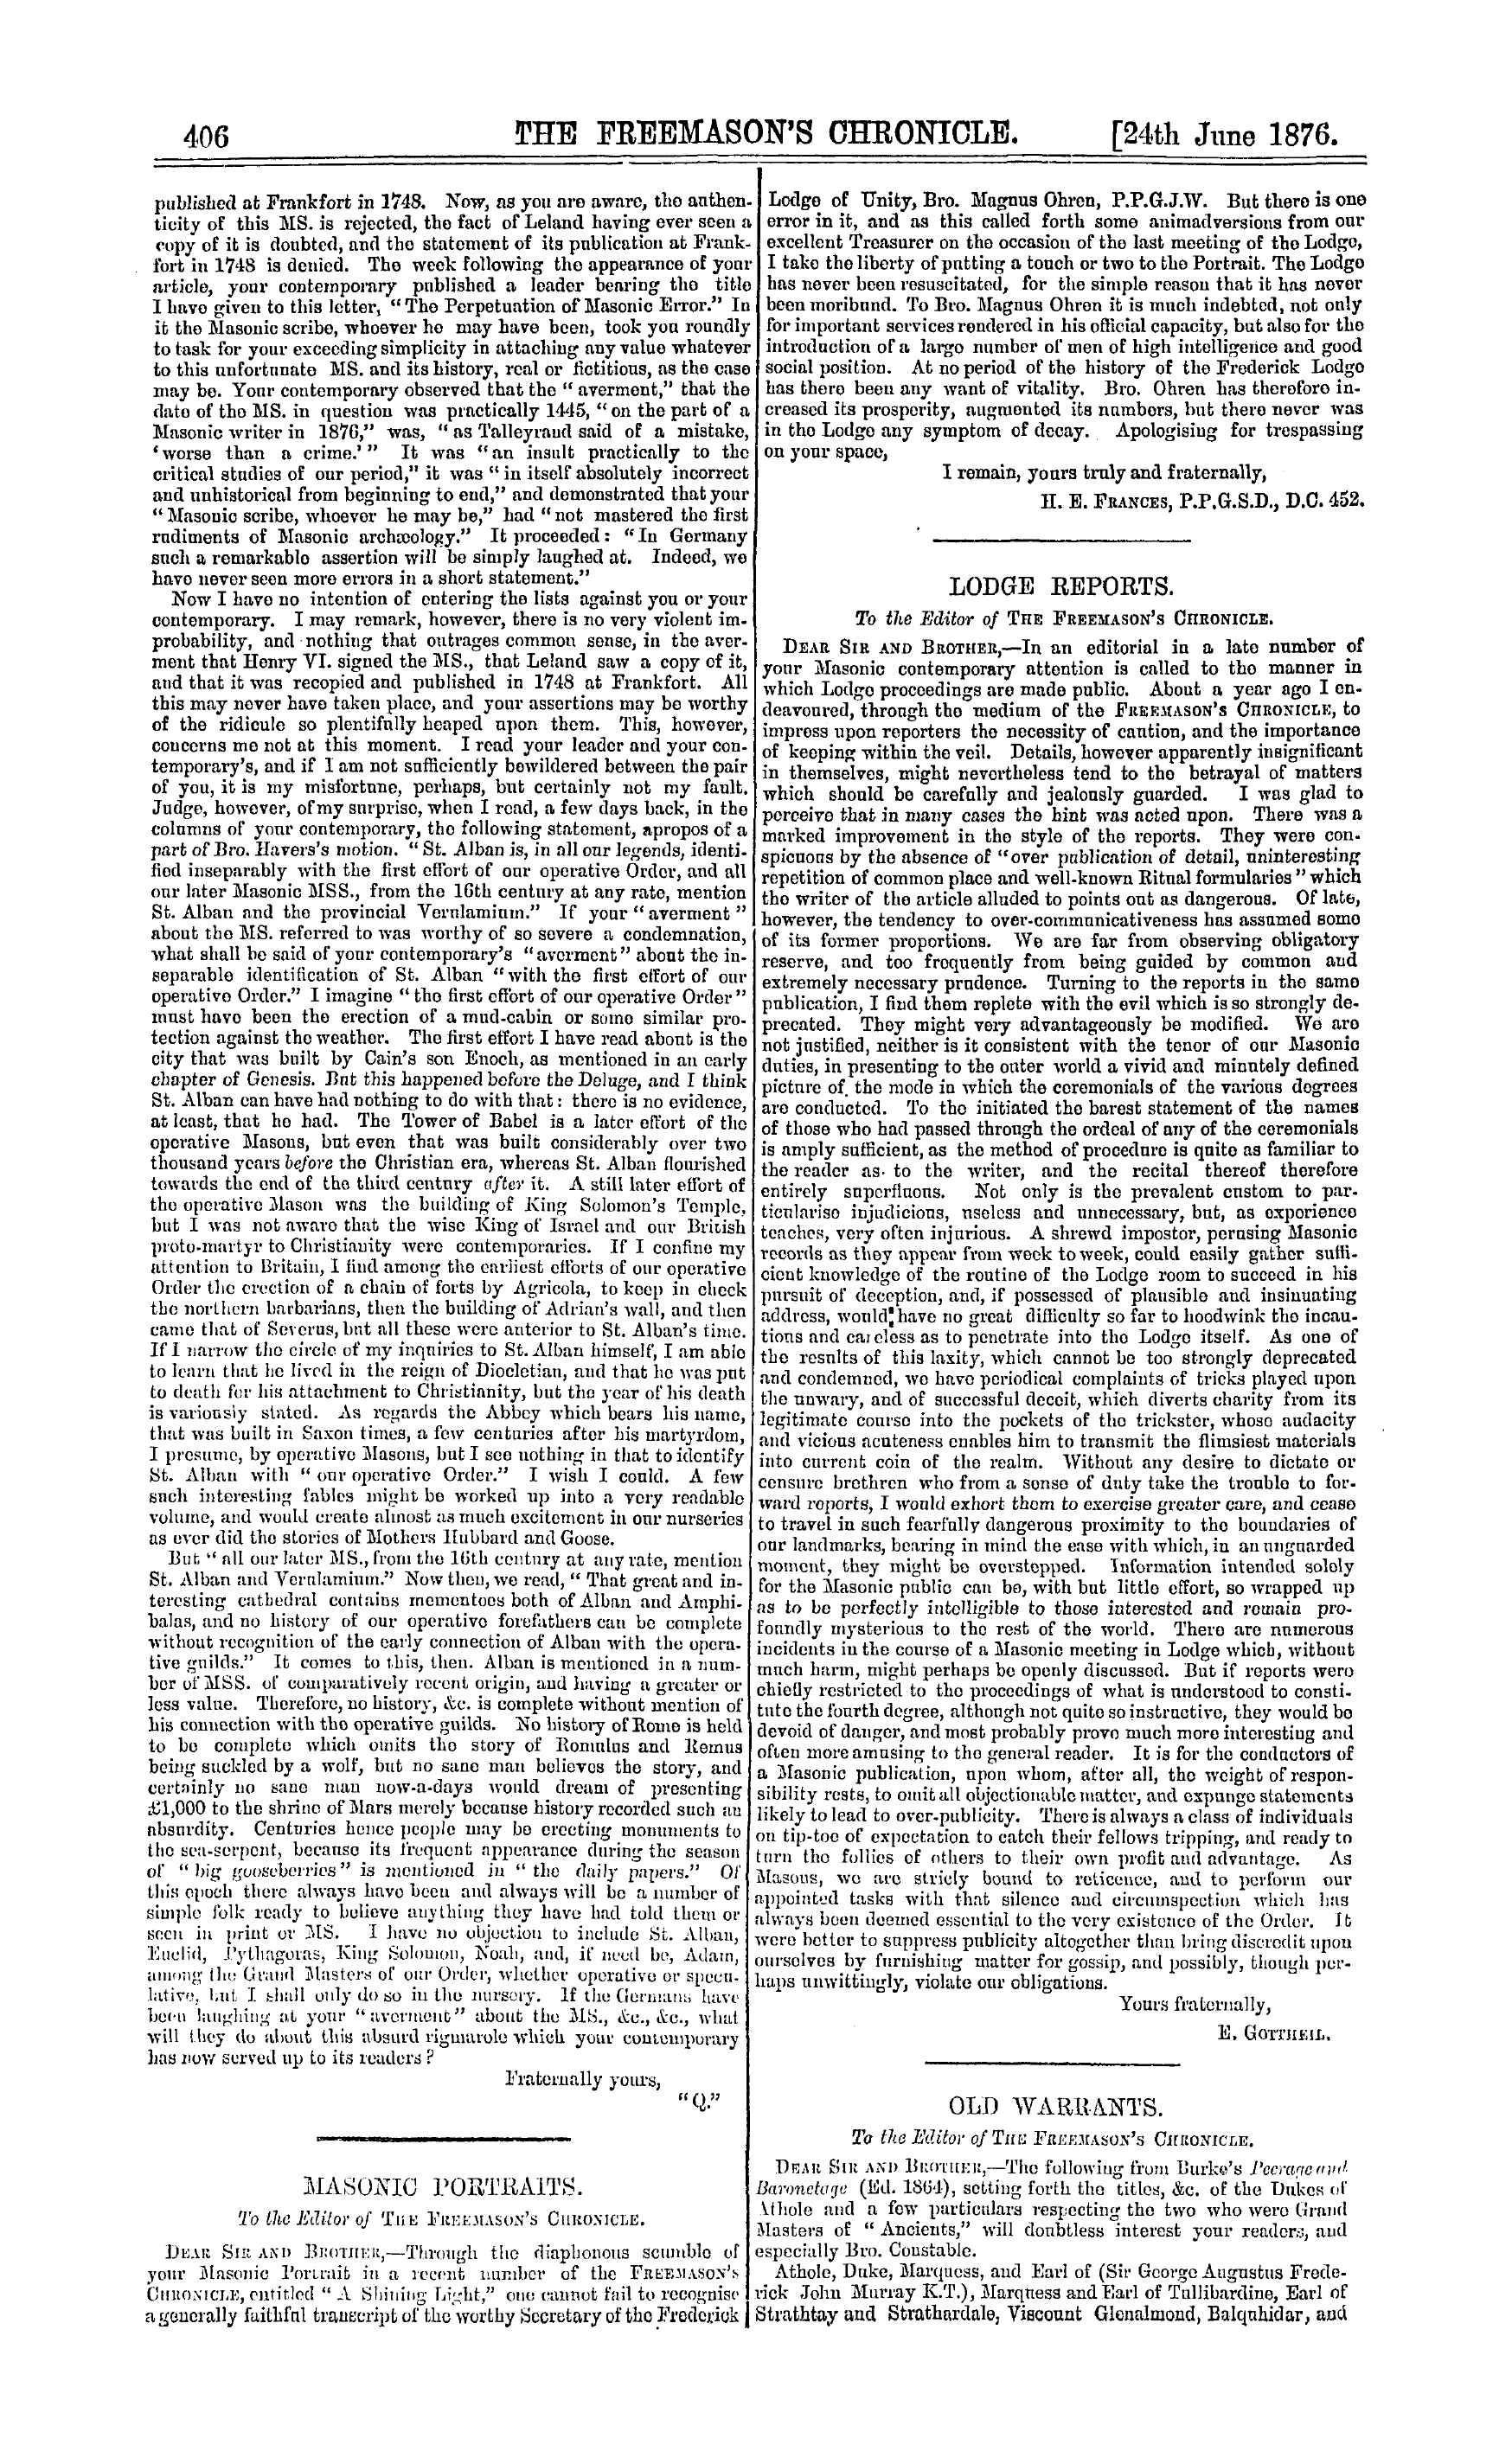 The Freemason's Chronicle: 1876-06-24 - Correspondence.